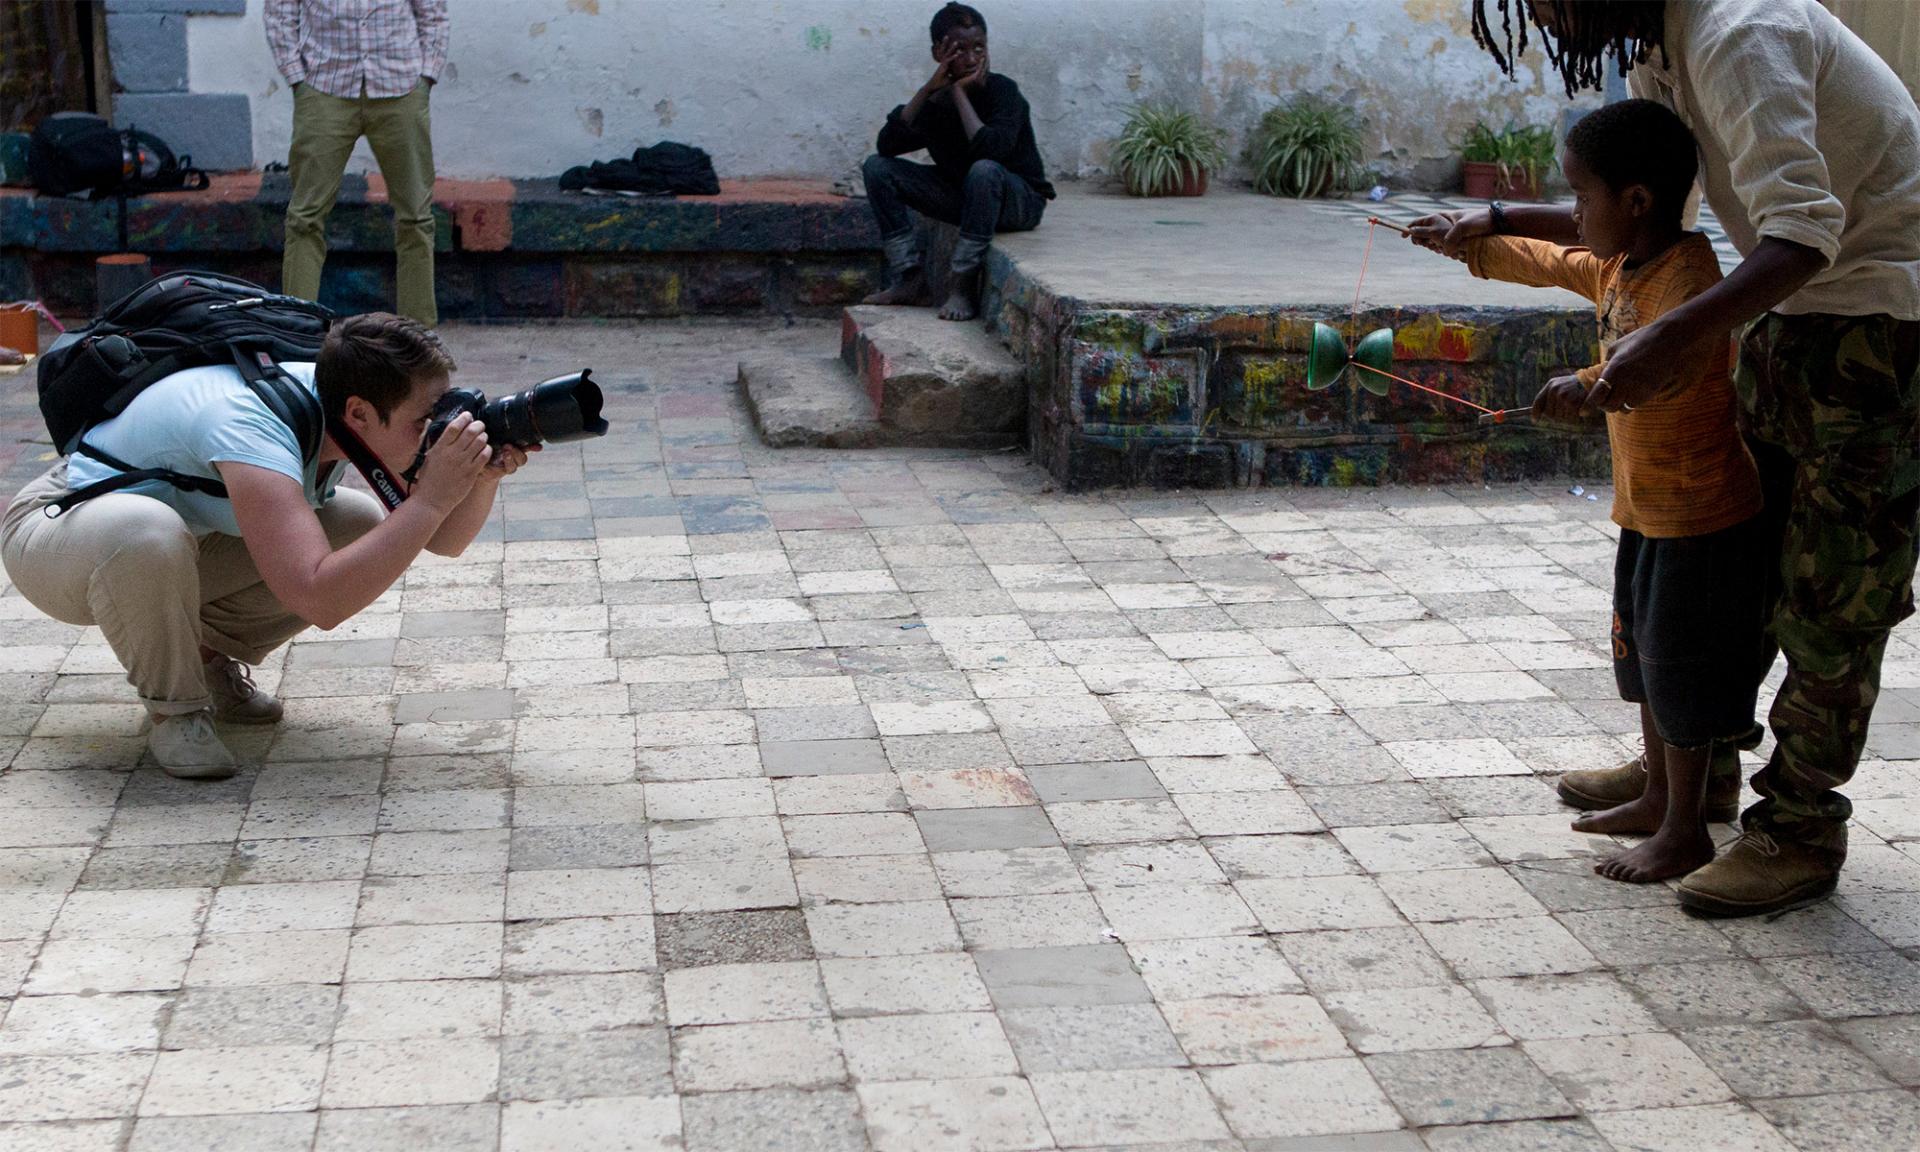 A photojournalism student takes photos on a trip abroad to Ethiopia